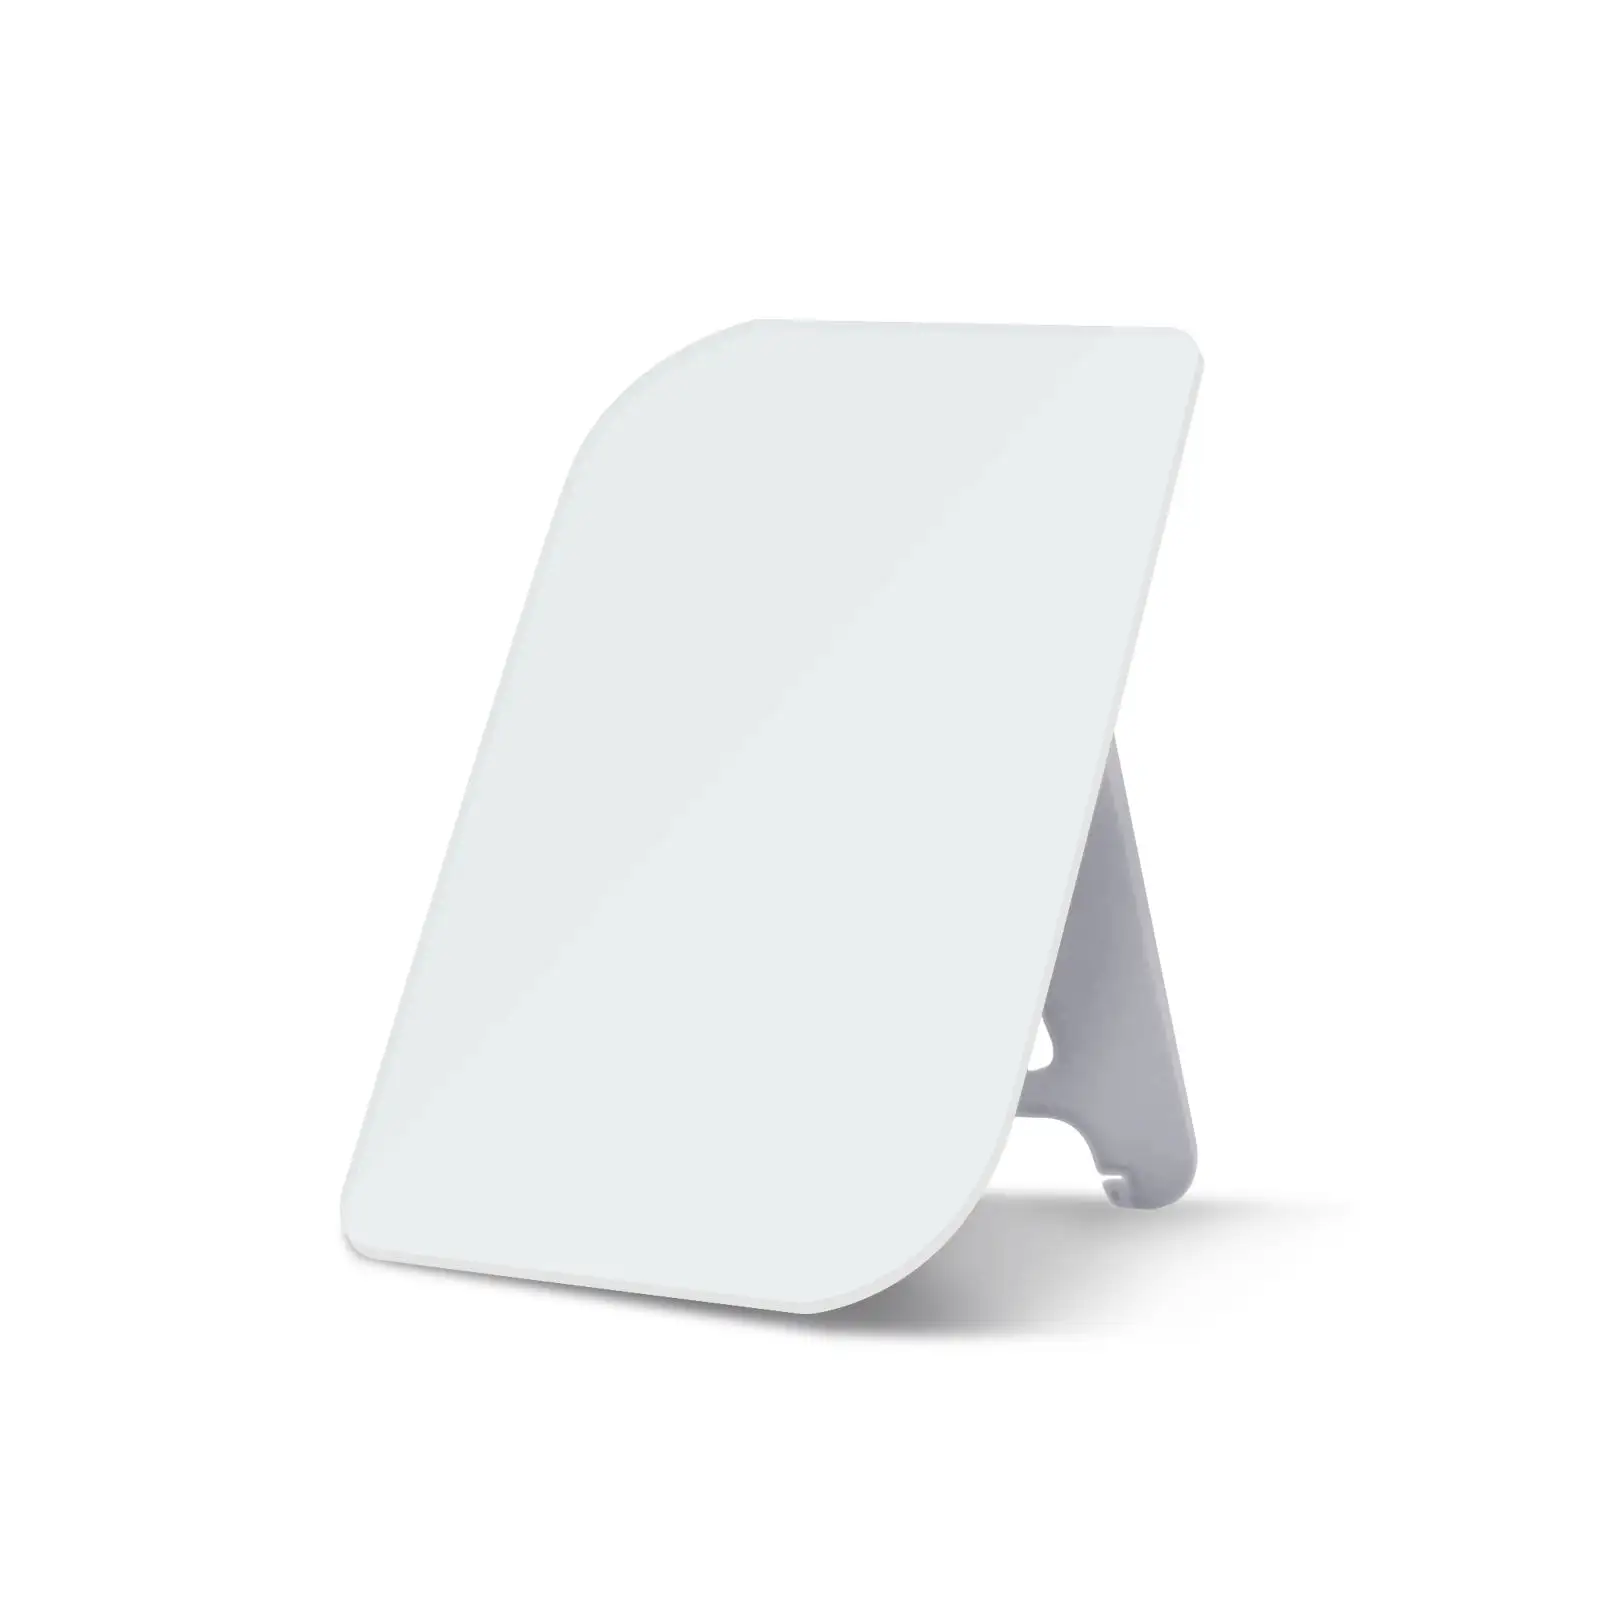 Papan putih Desktop penghapus kering kaca kecil persegi pandangan nyaman dengan dudukan untuk rumah kantor